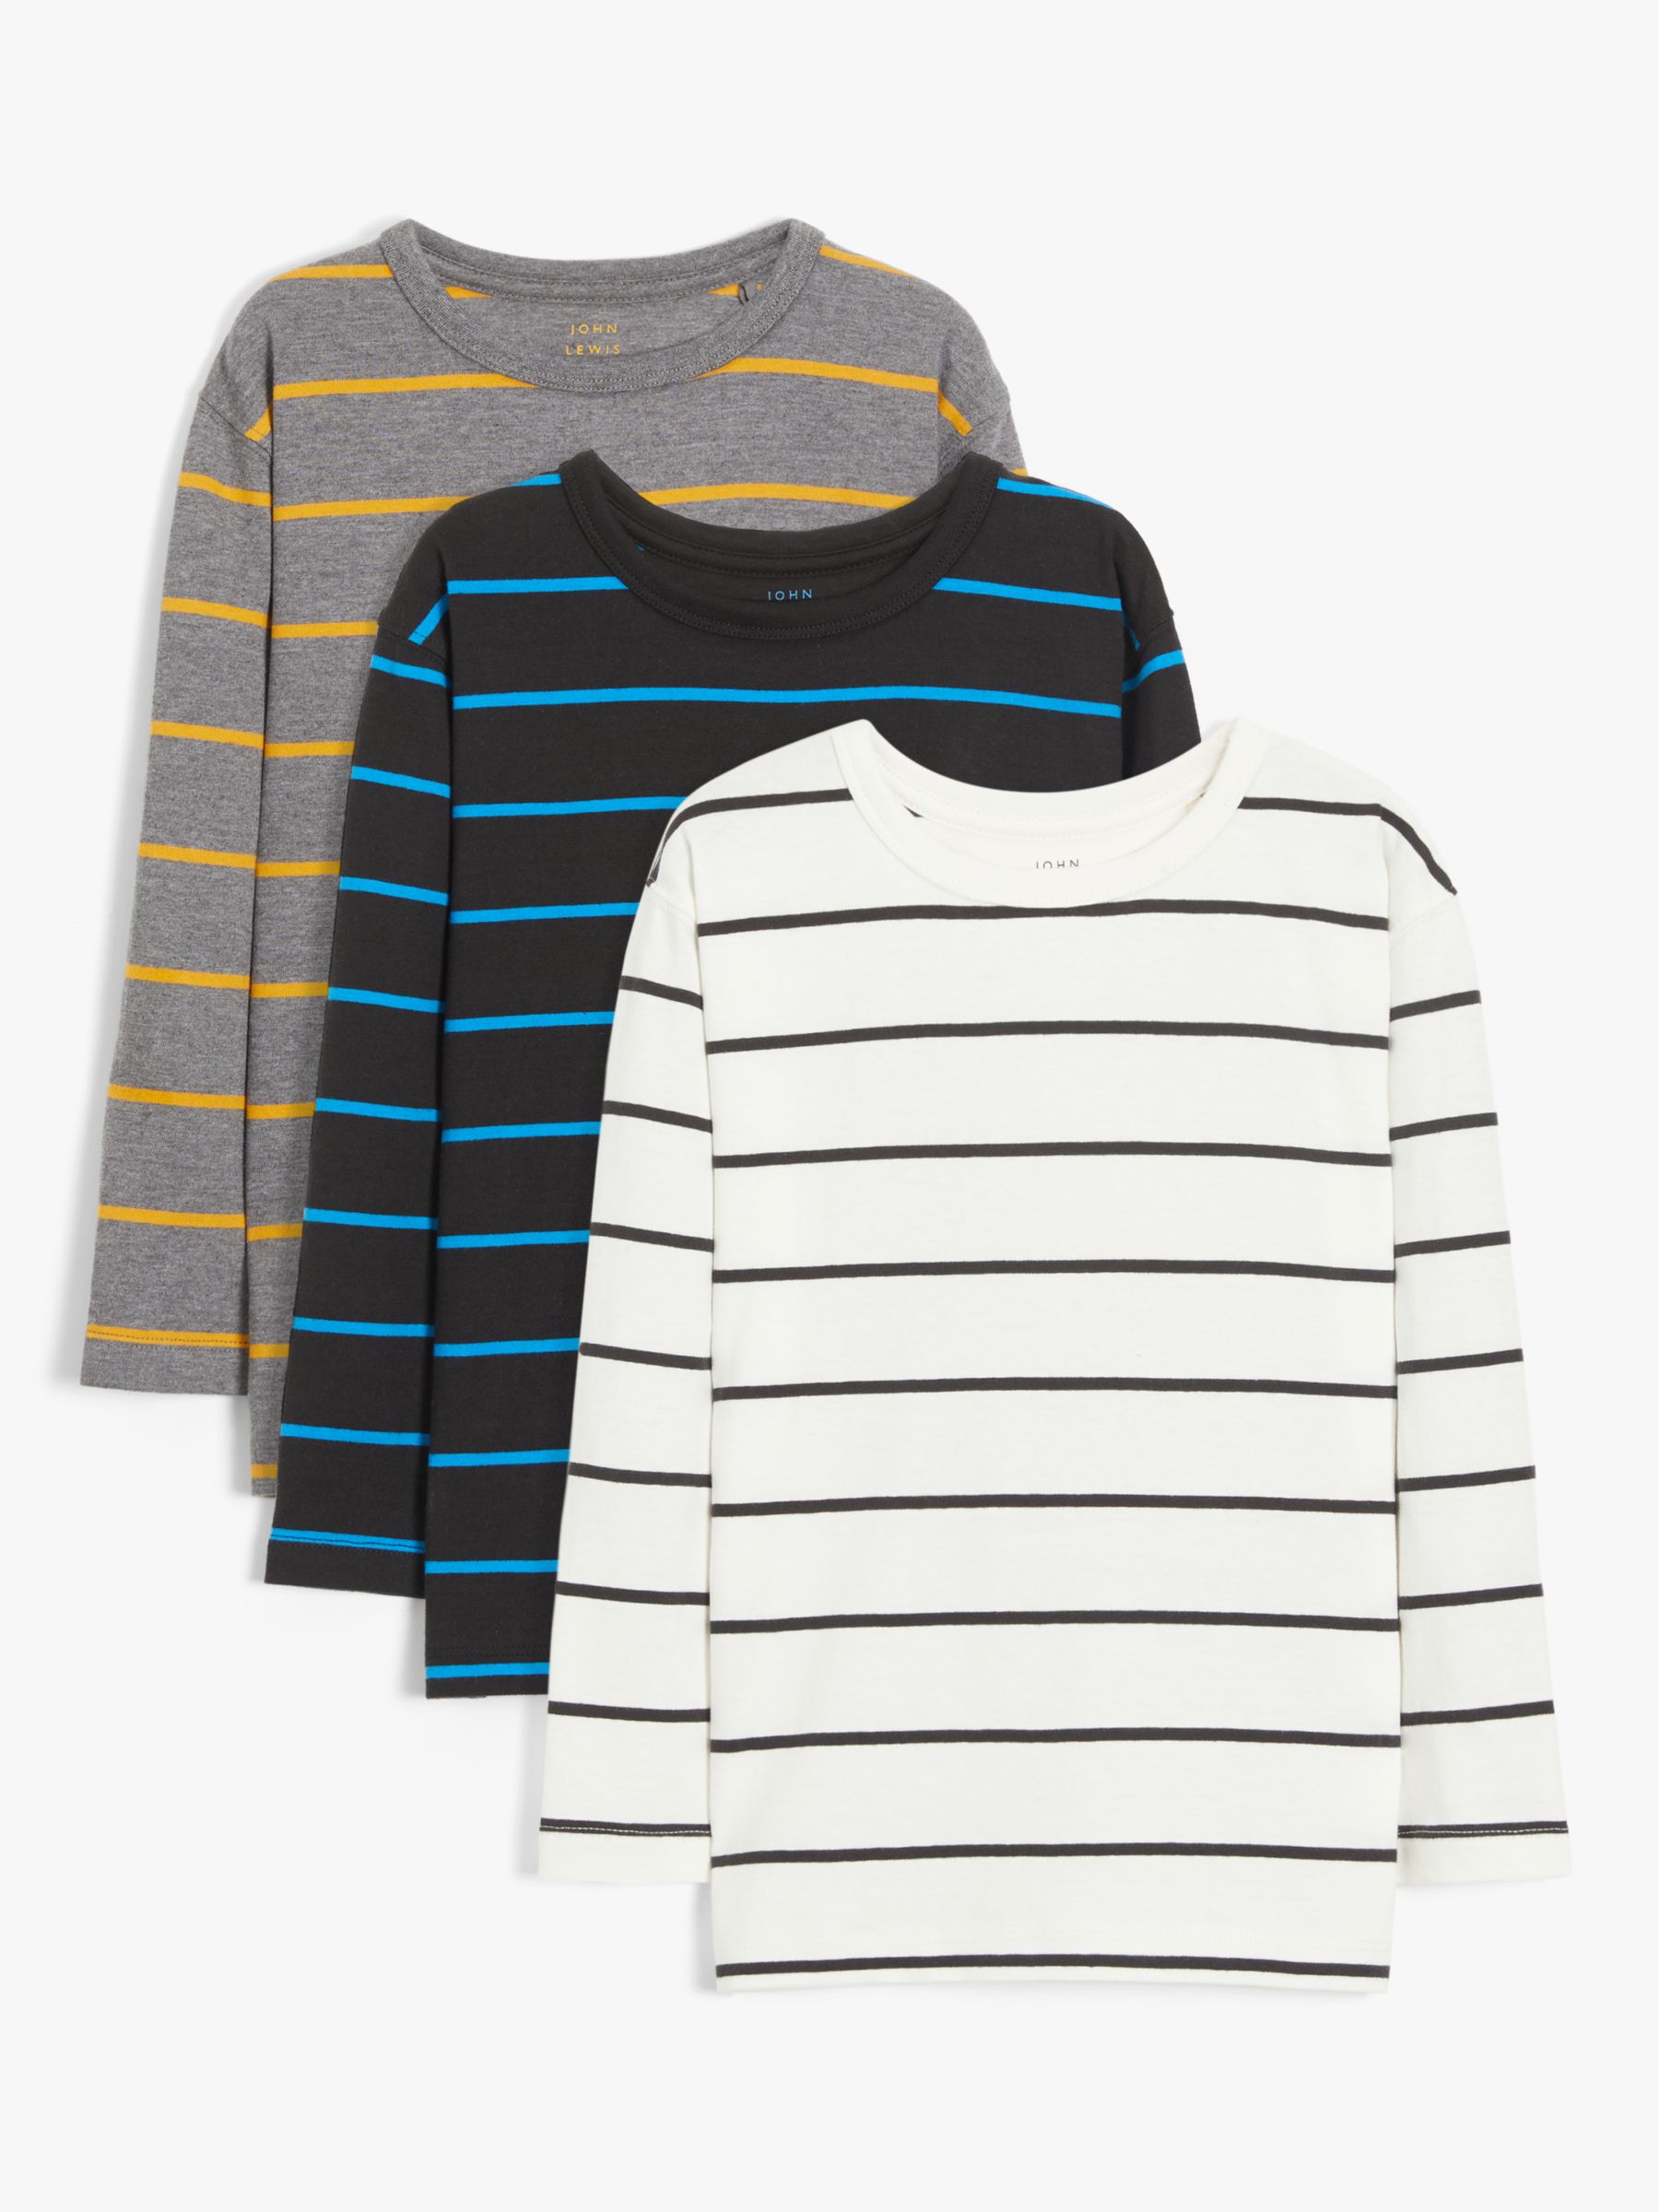 Image of John Lewis and Partners Boys Long Sleeve Stripe TShirts Pack of 3 Multi